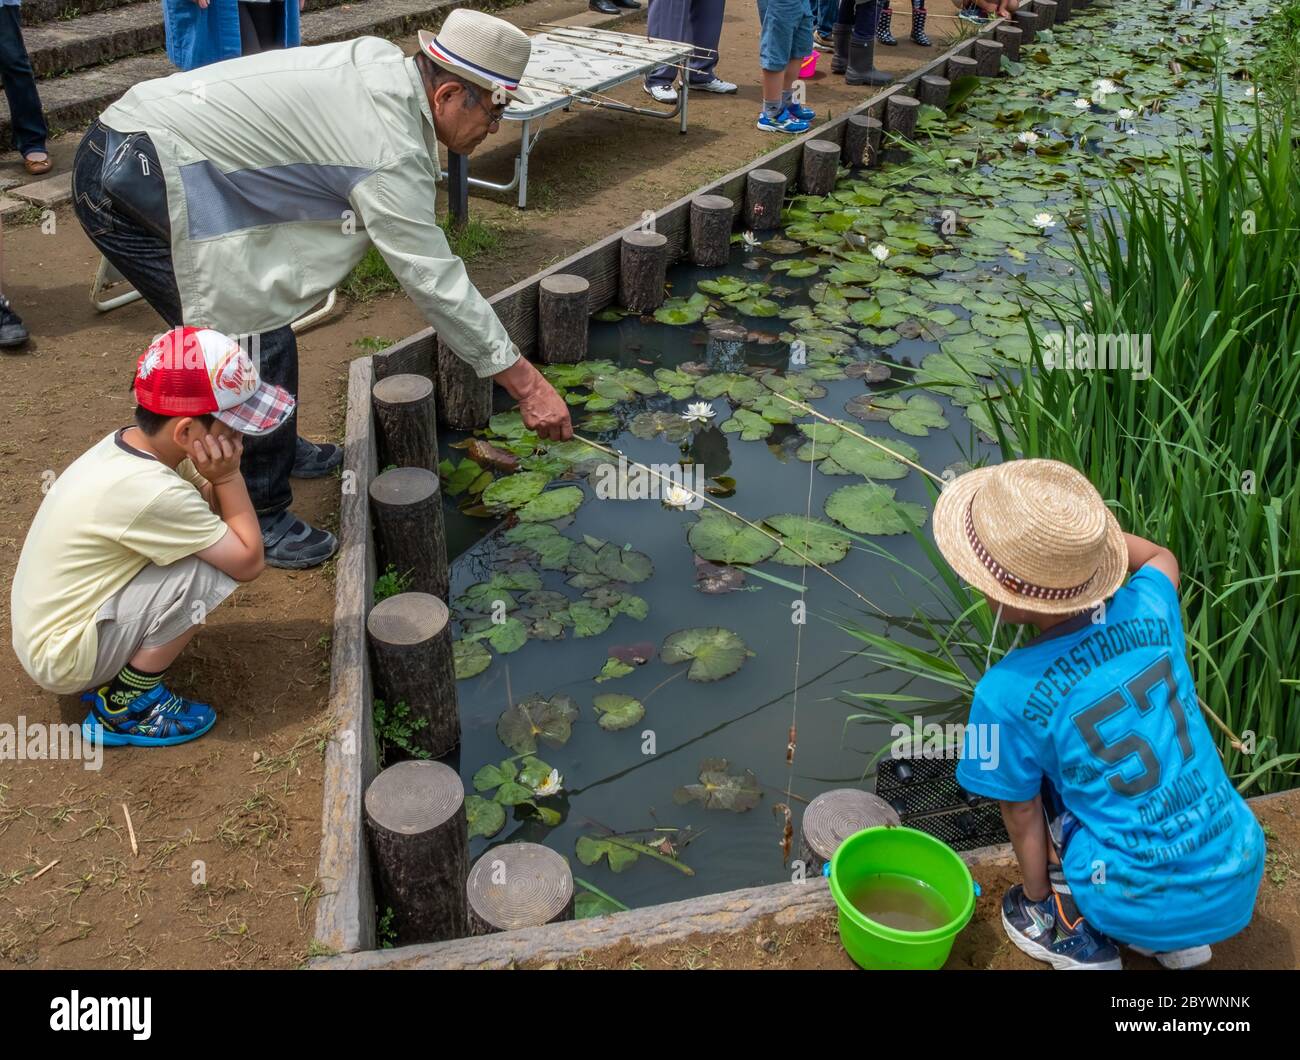 Children and family enjoying fishing in a pond during Suigo Itako Iris Festival, Ibaraki, Japan Stock Photo